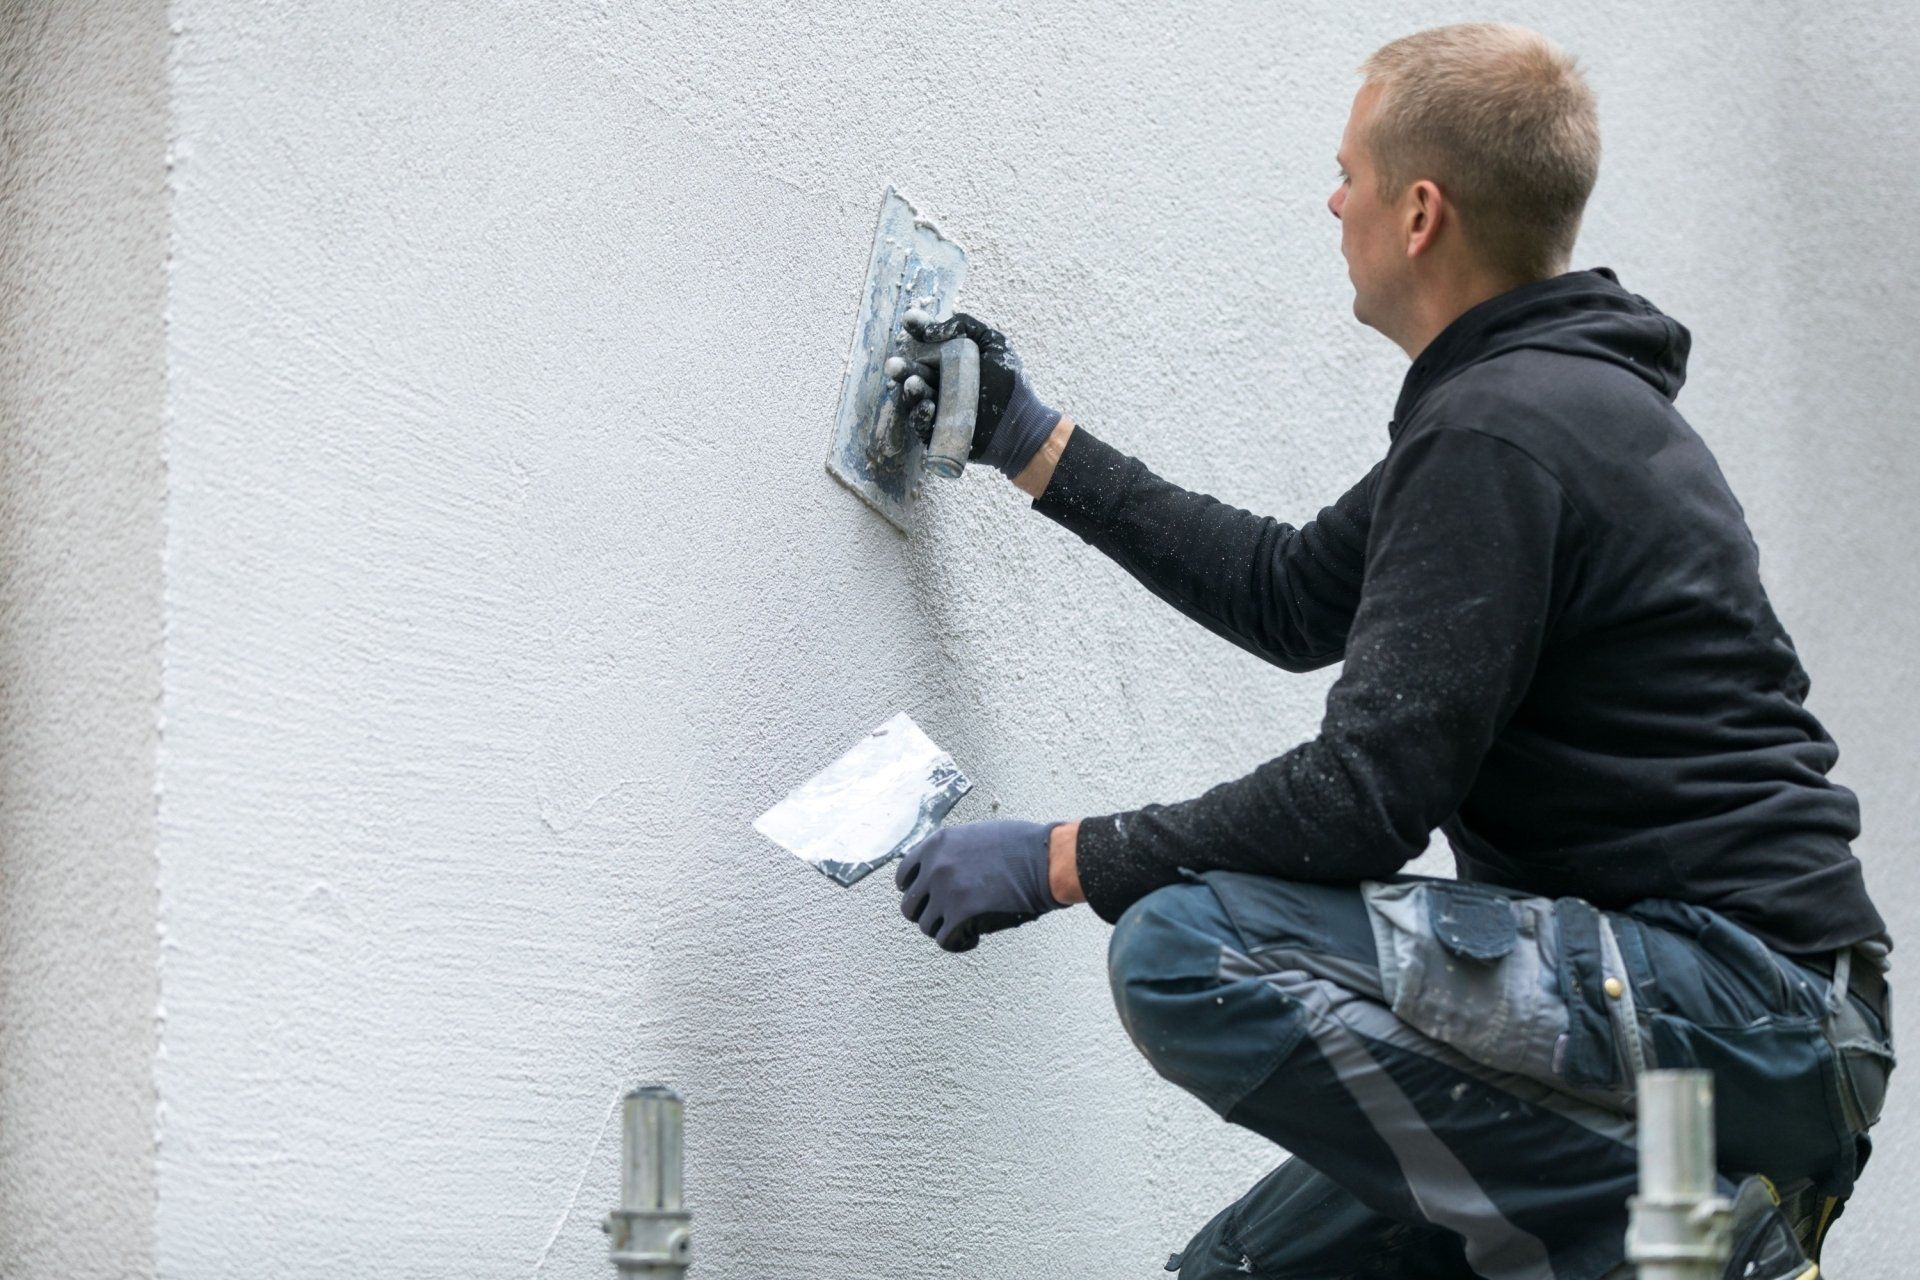 contractor finishing exterior stucco paint job